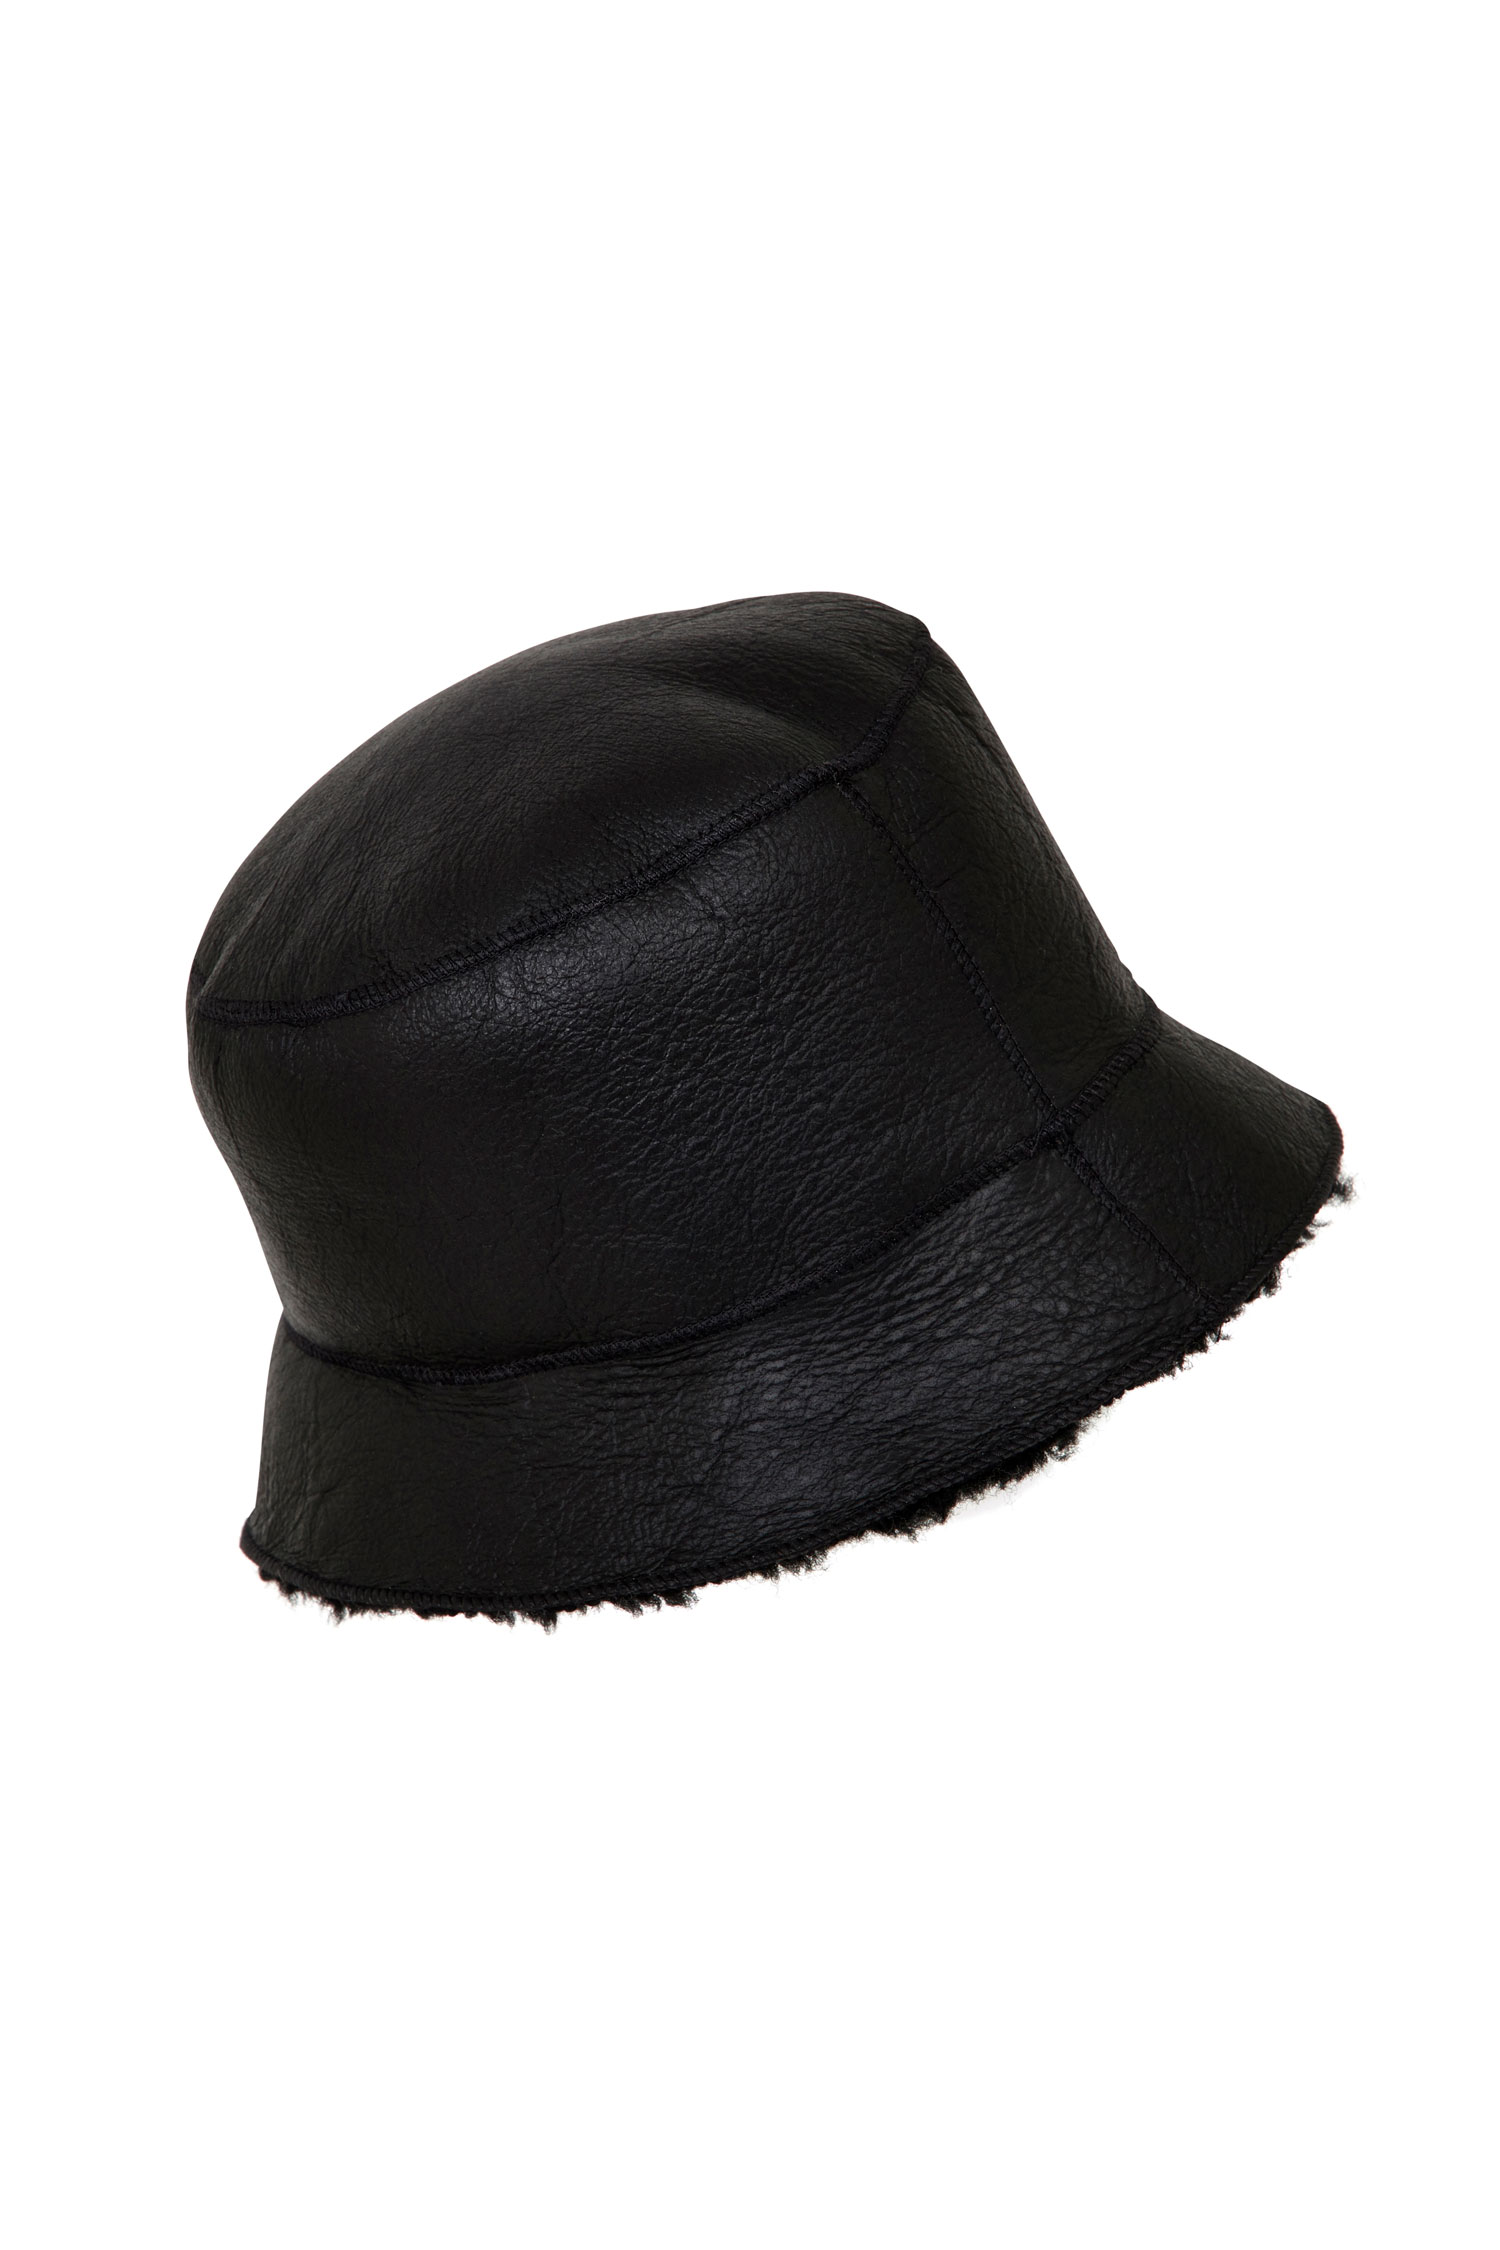 Gushlow & Cole Black Shearling/Sheepskin Bucket Hat